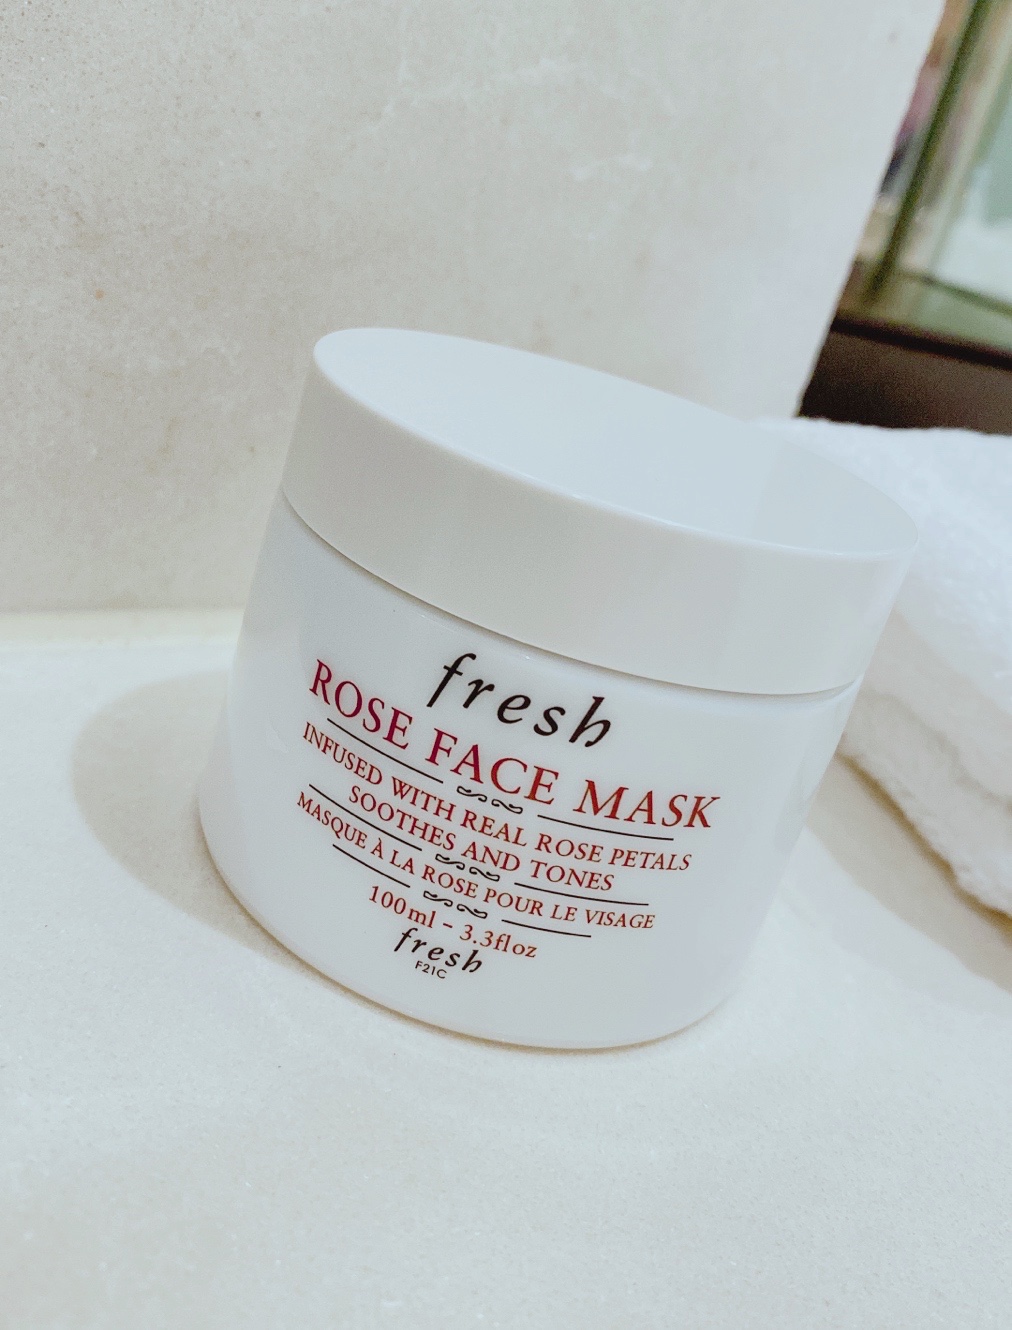 Fresh 玫瑰保濕面膜 Rose Face Mask 好用 推薦